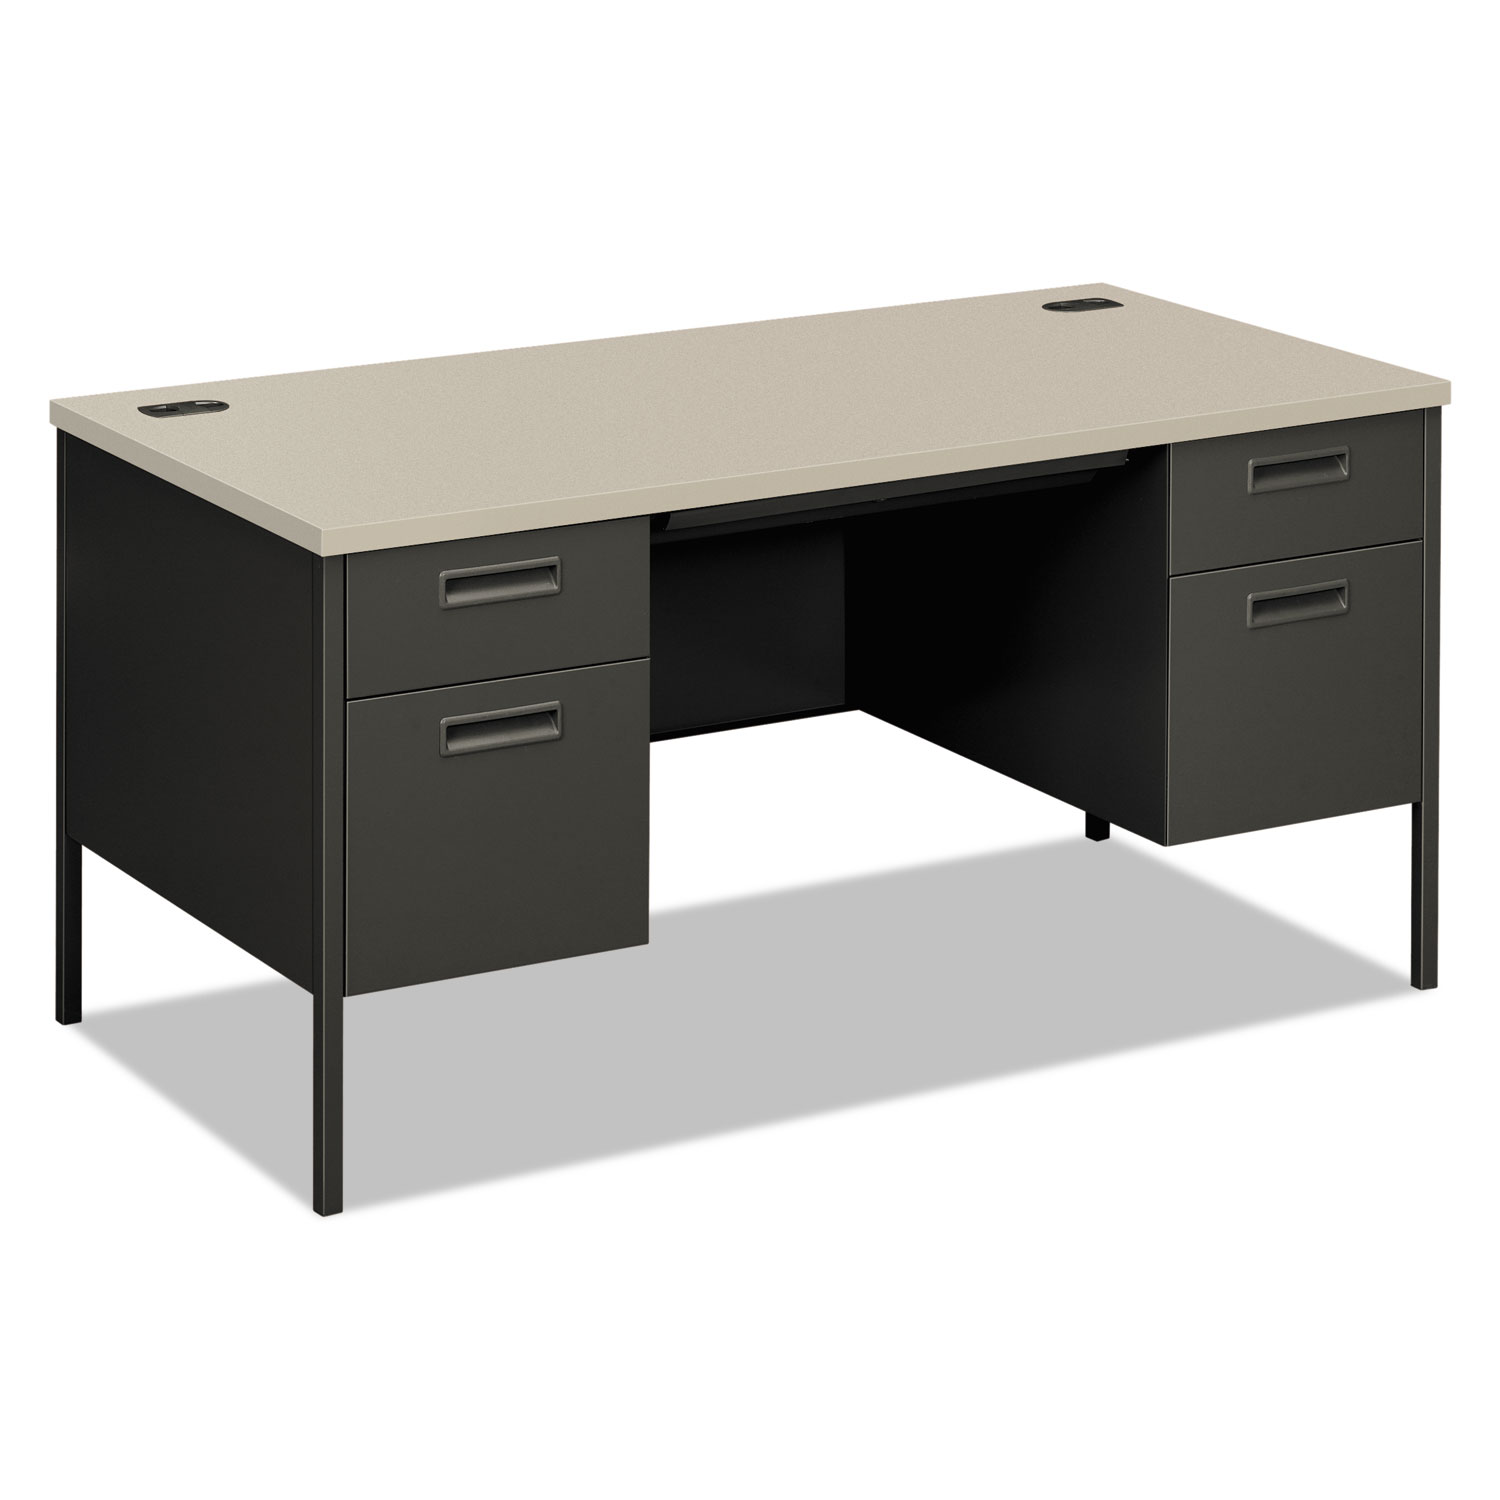 HON HONP3262G2S  Metro Classic Double Pedestal Desk, 60w x 30d x 29 1/2h, Gray Patterned/Charcoal